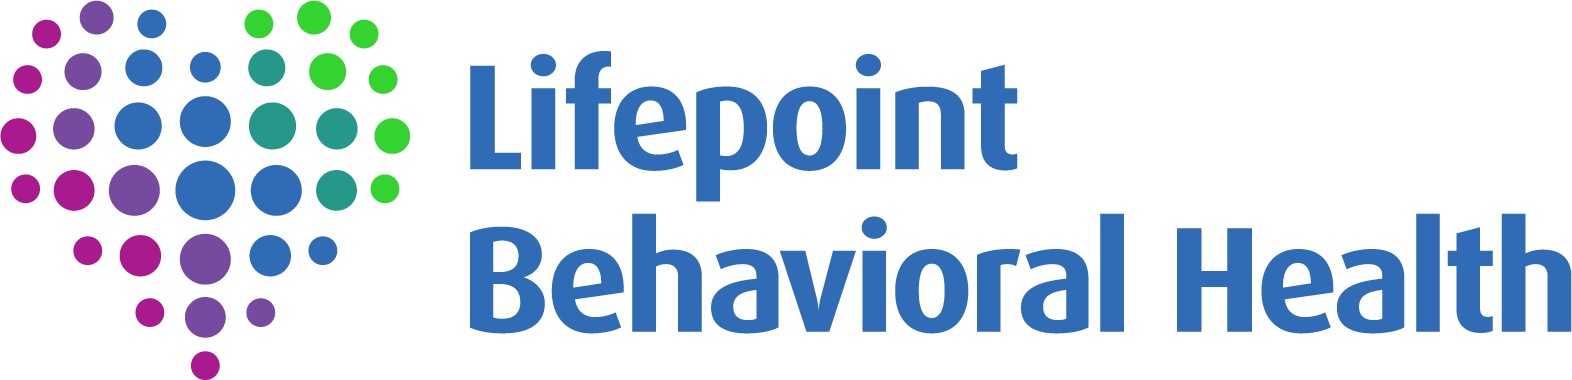 Behavioral Health Partnerships | Lifepoint Health